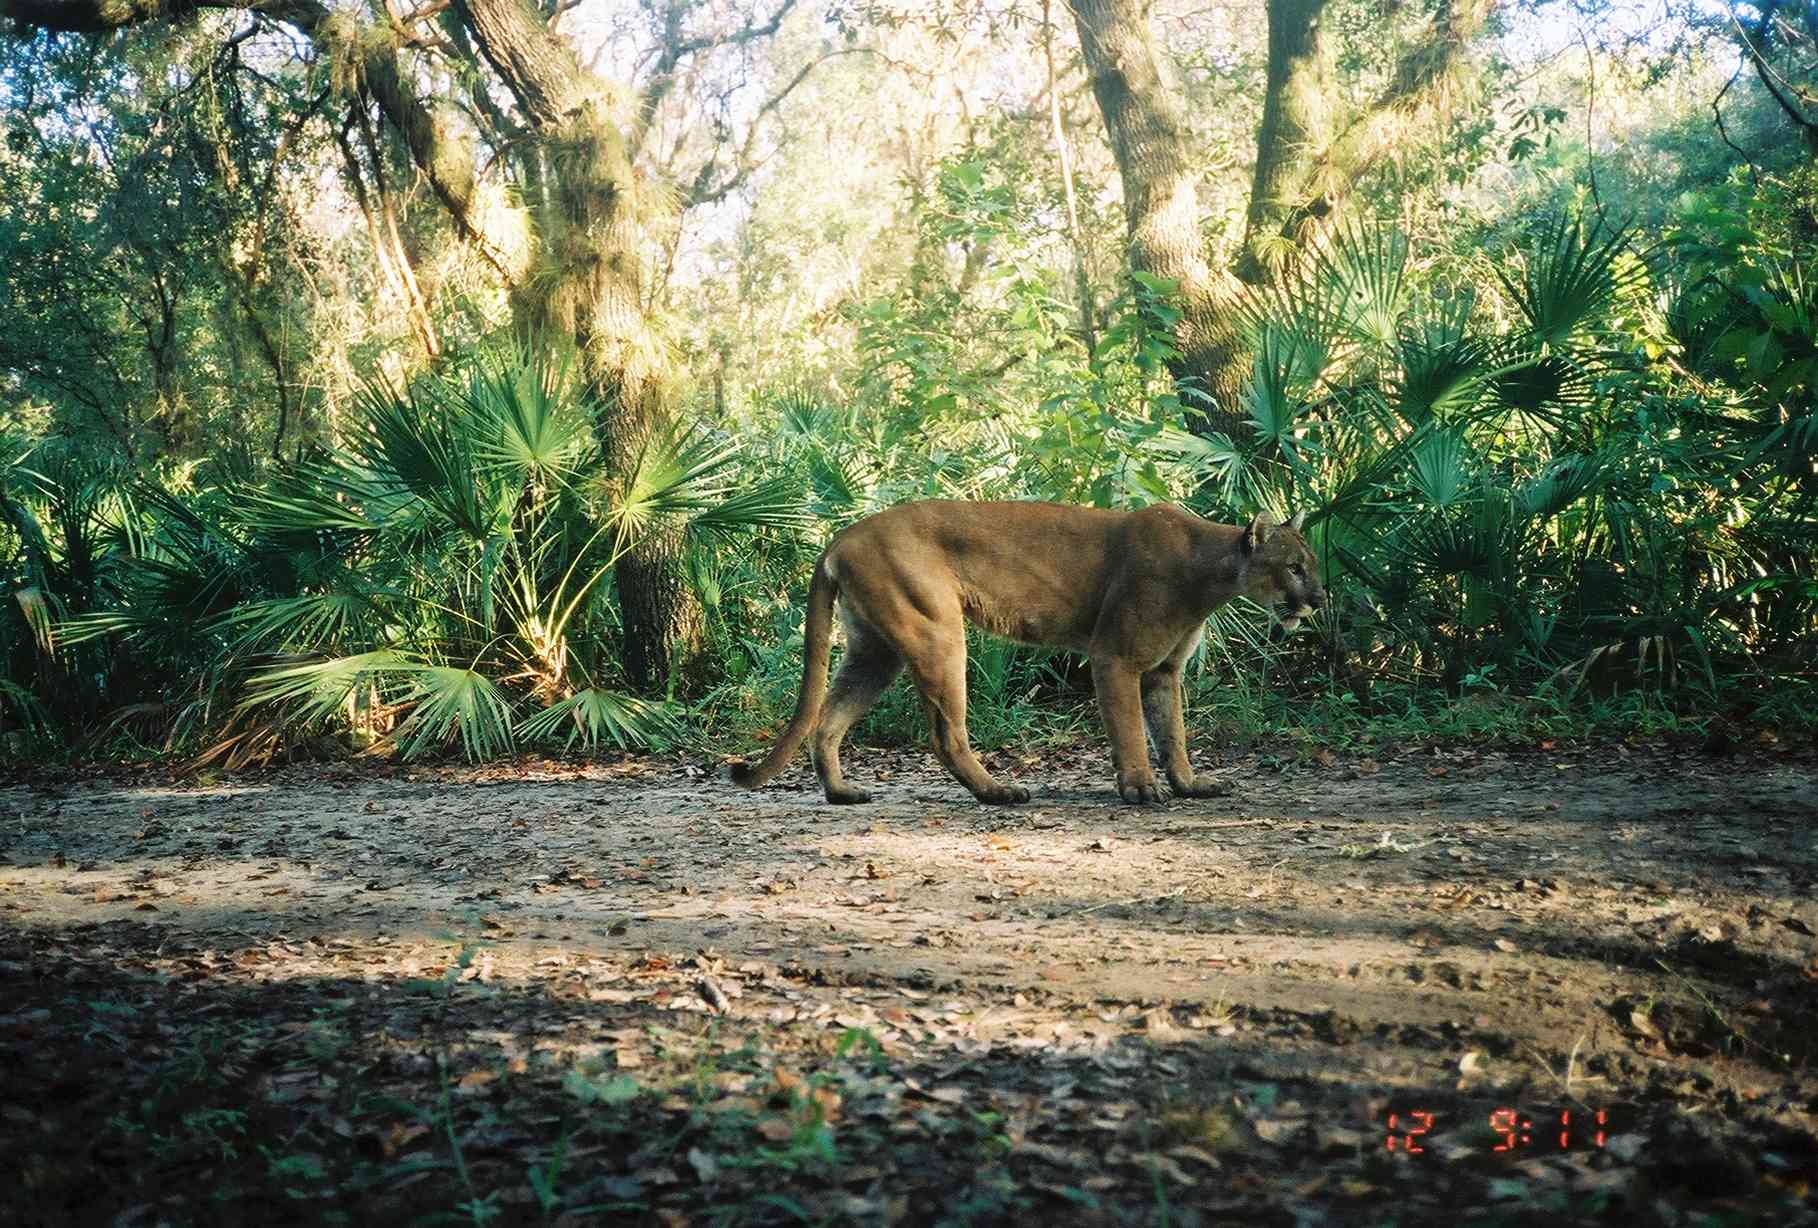  Adult Male Florida Panther in Florida Panther National Wildlife Refuge